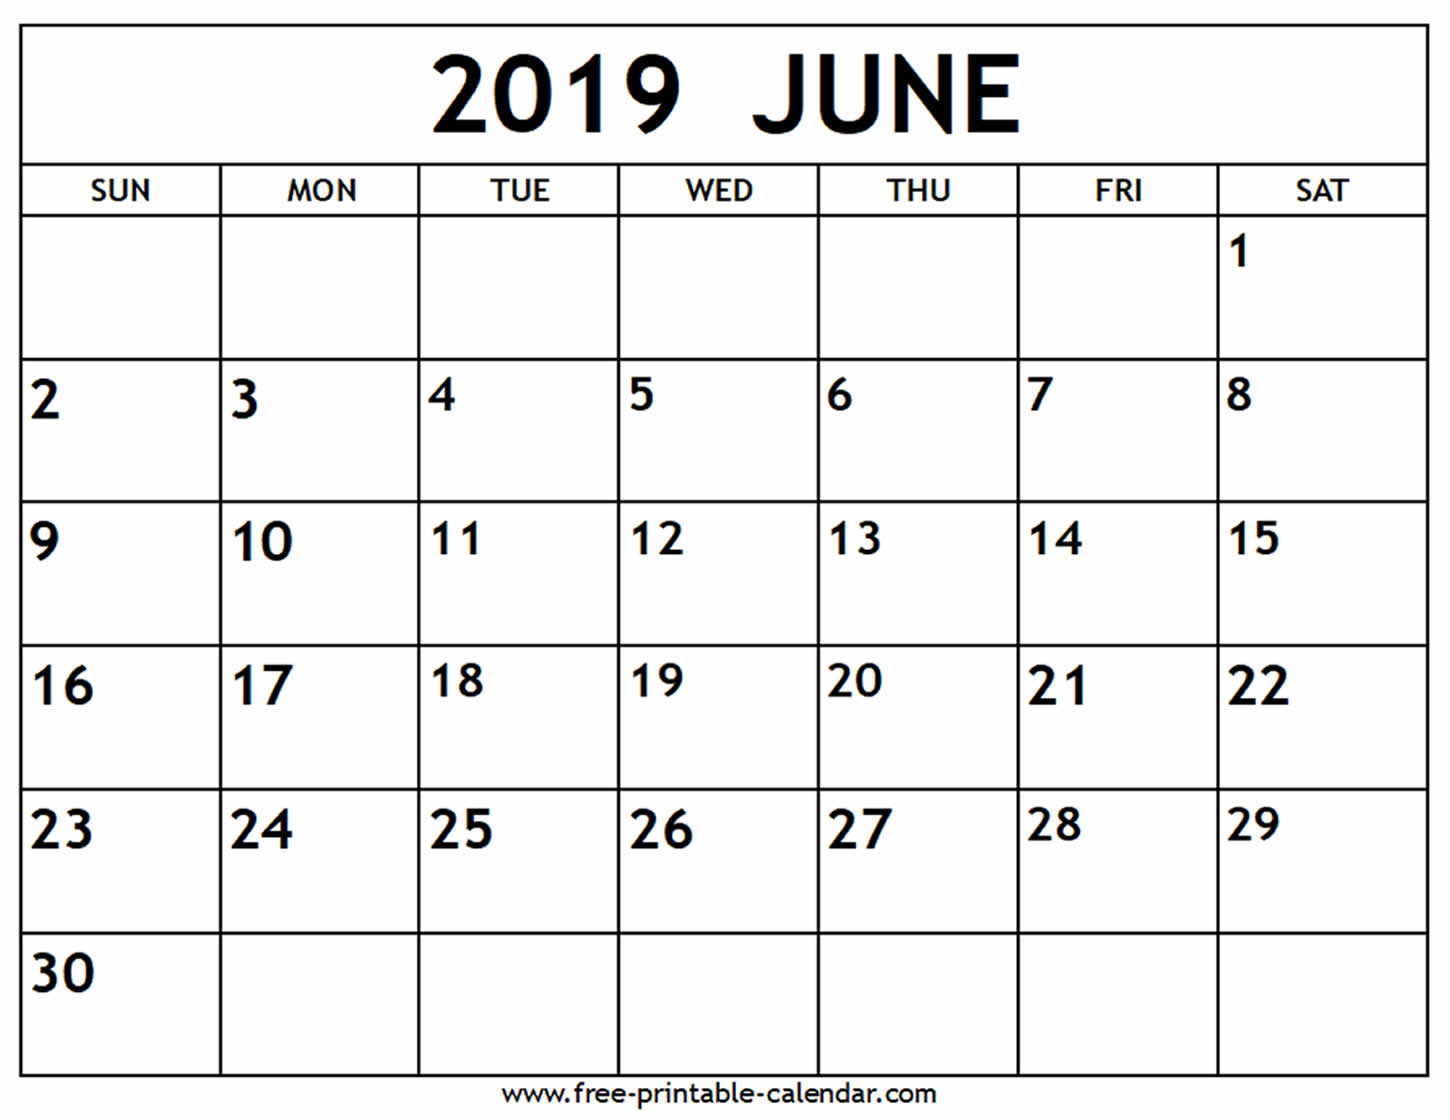 June 2019 Calendar - Free-Printable-Calendar